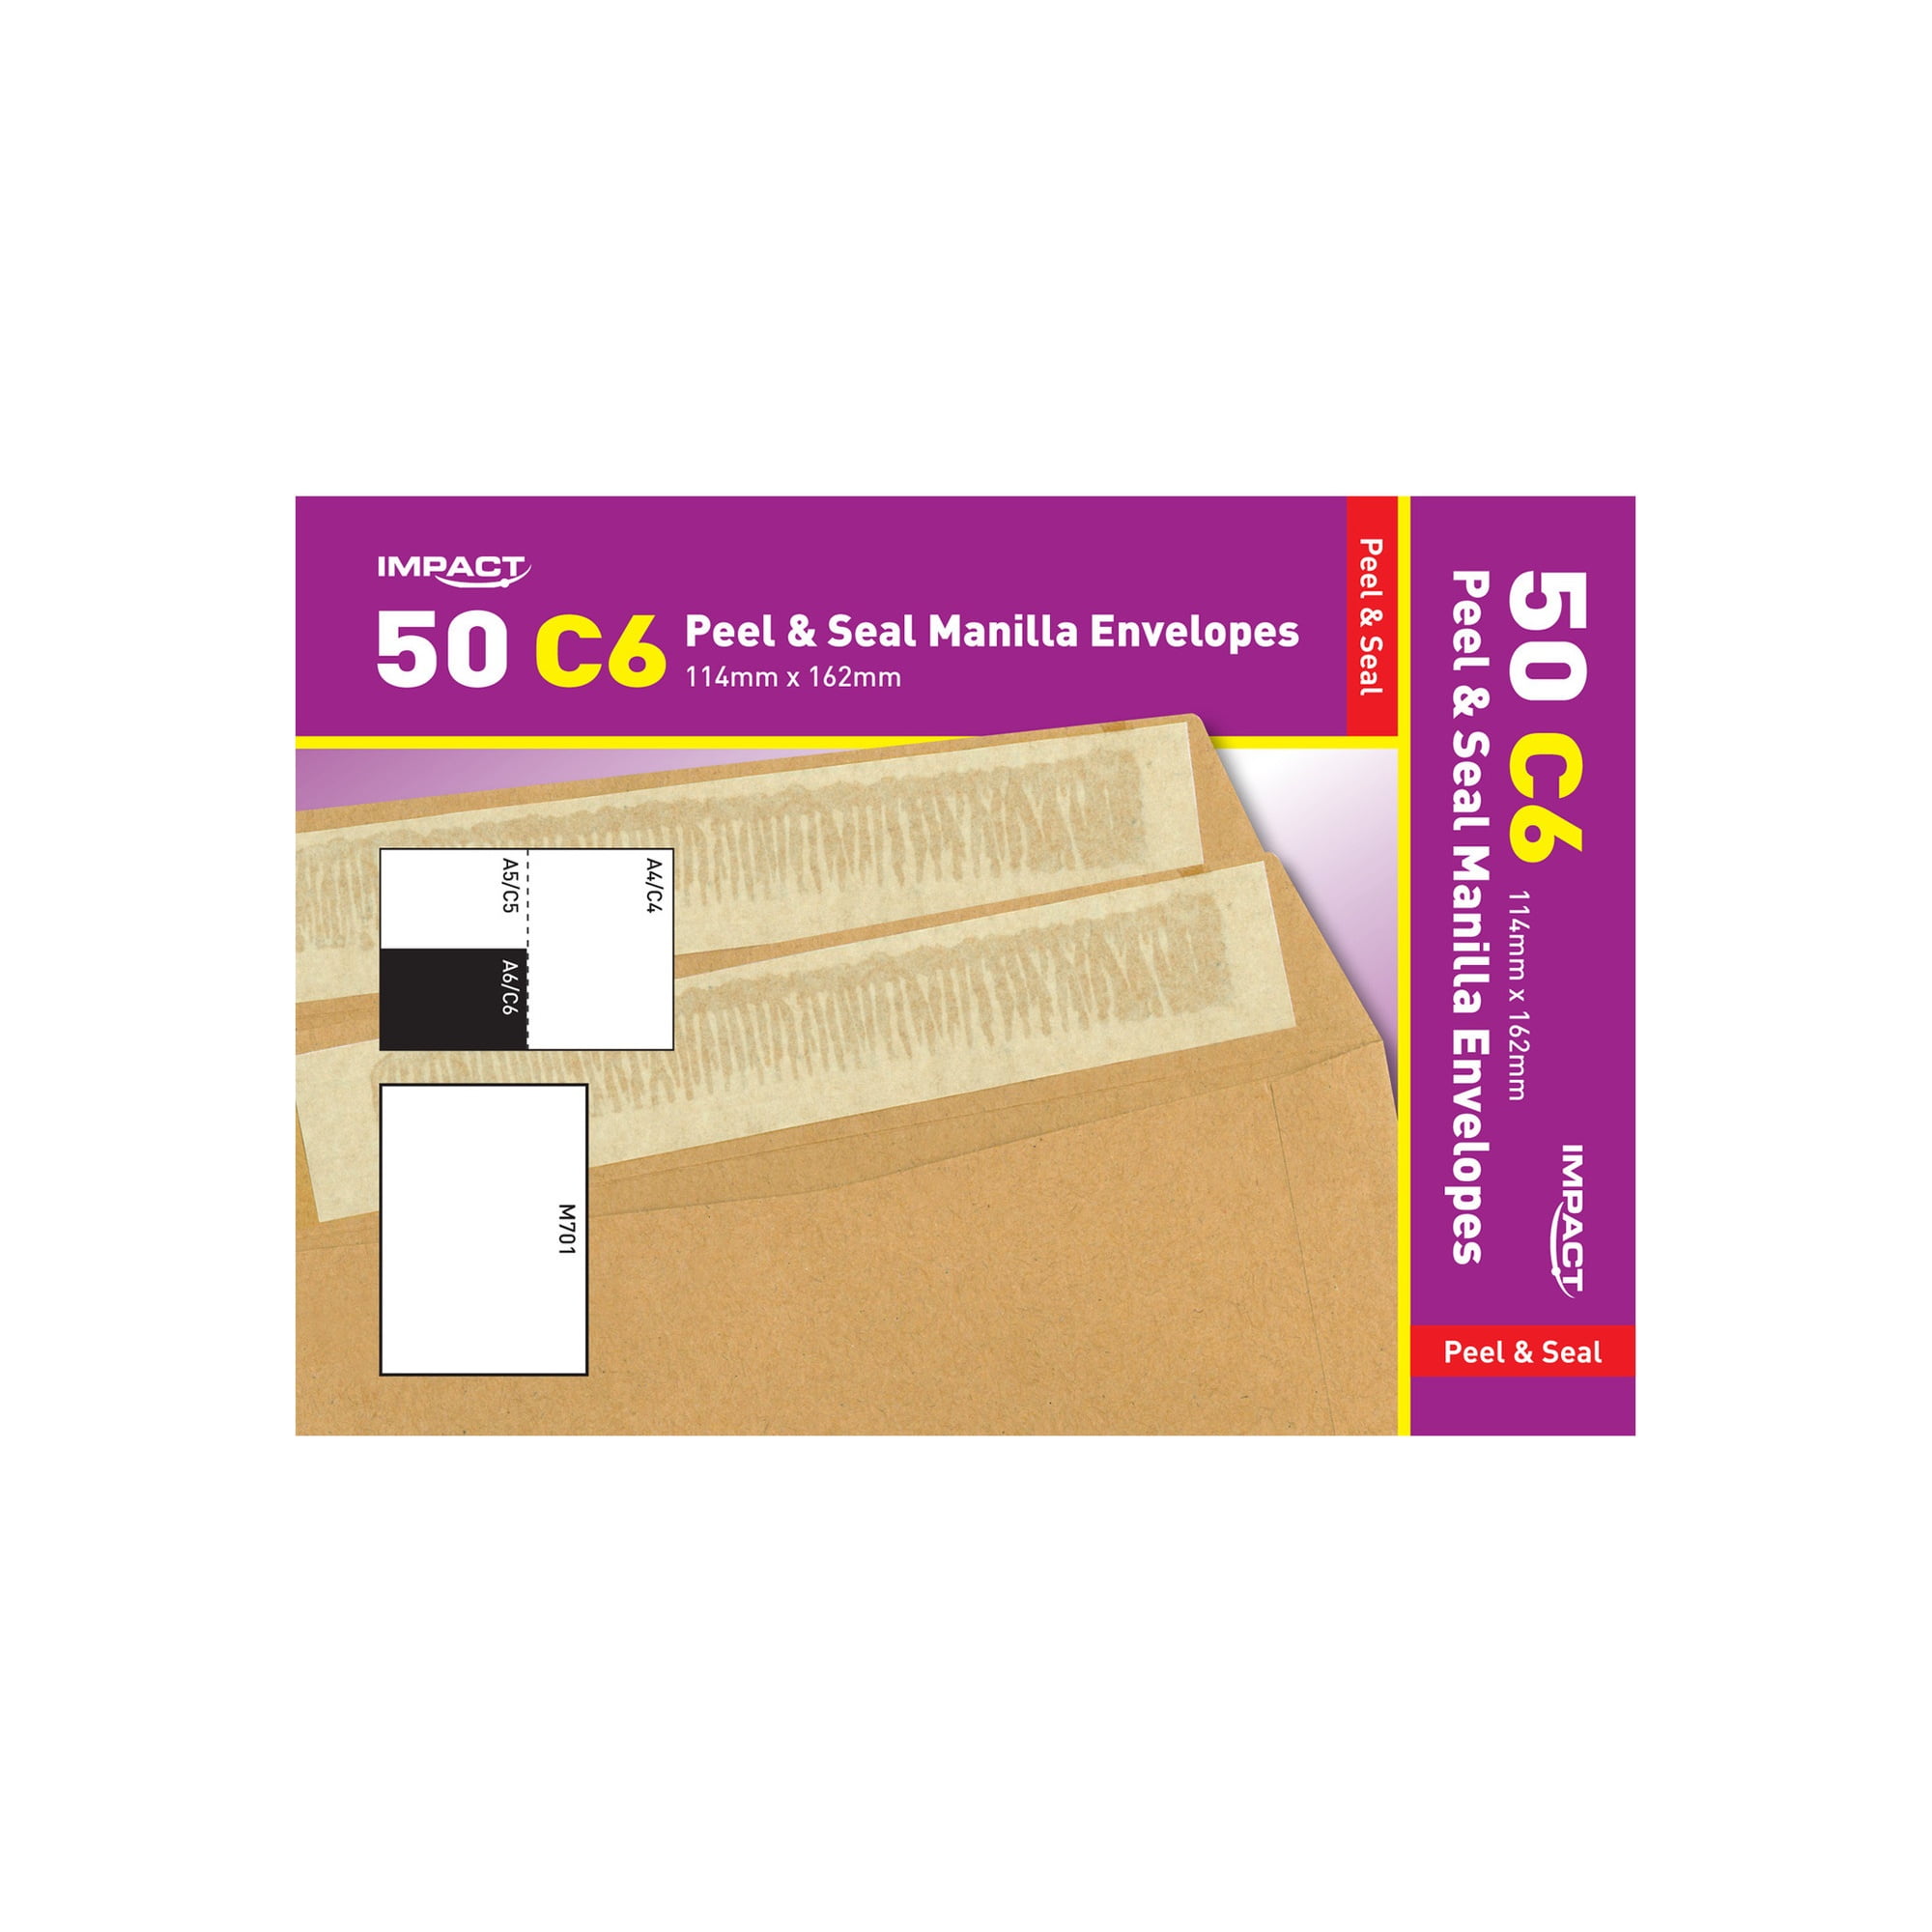 DL C5 C4 A4 A5 Heavy Duty Peel & Seal  Manila Brown Envelopes Home Office-50 PCS 